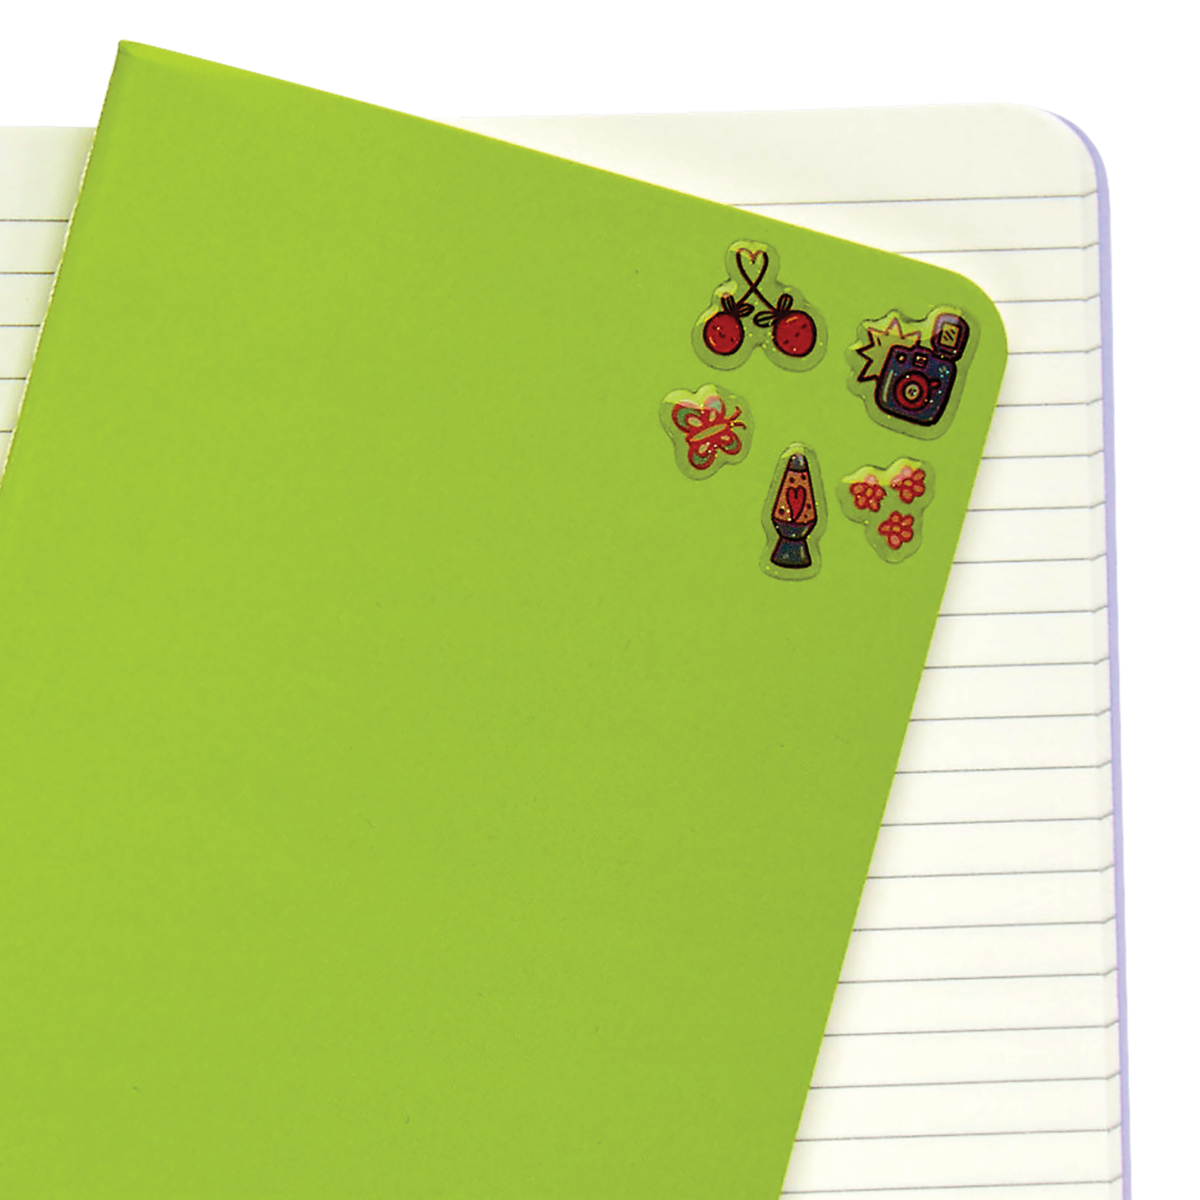 Stickiville GRL Boss stickers on green paper notebook